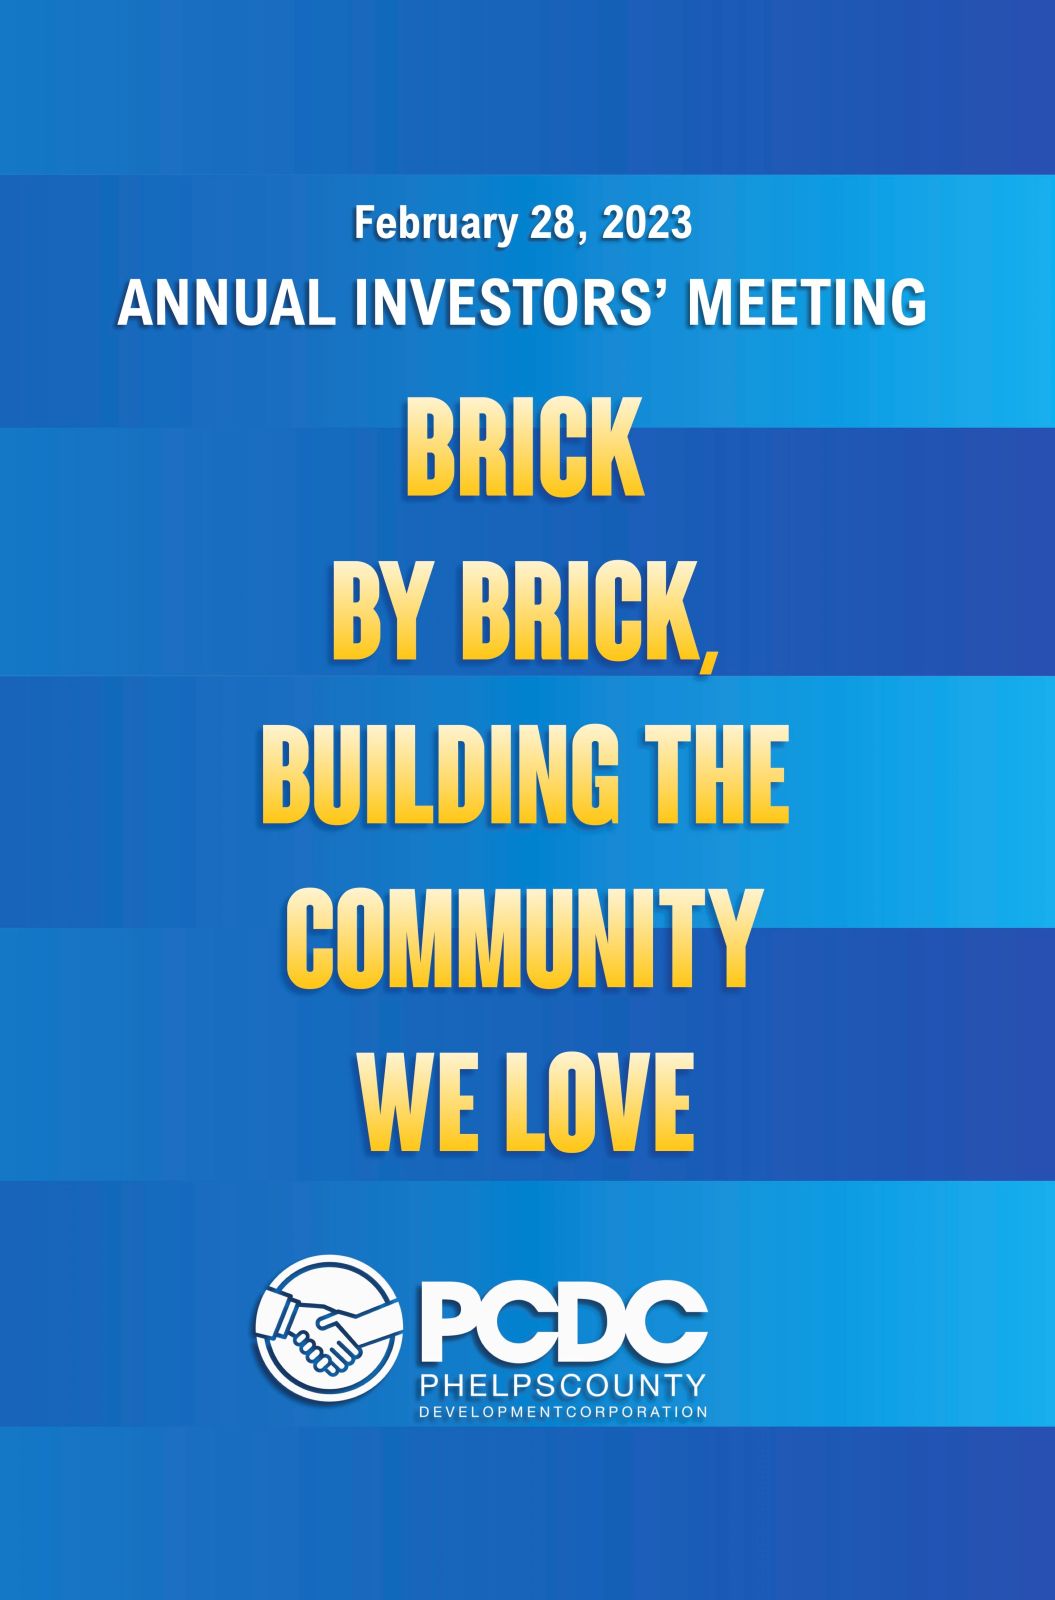 Feb. 28 Annual Meeting Will Celebrate Wins, Brick by Brick Main Photo